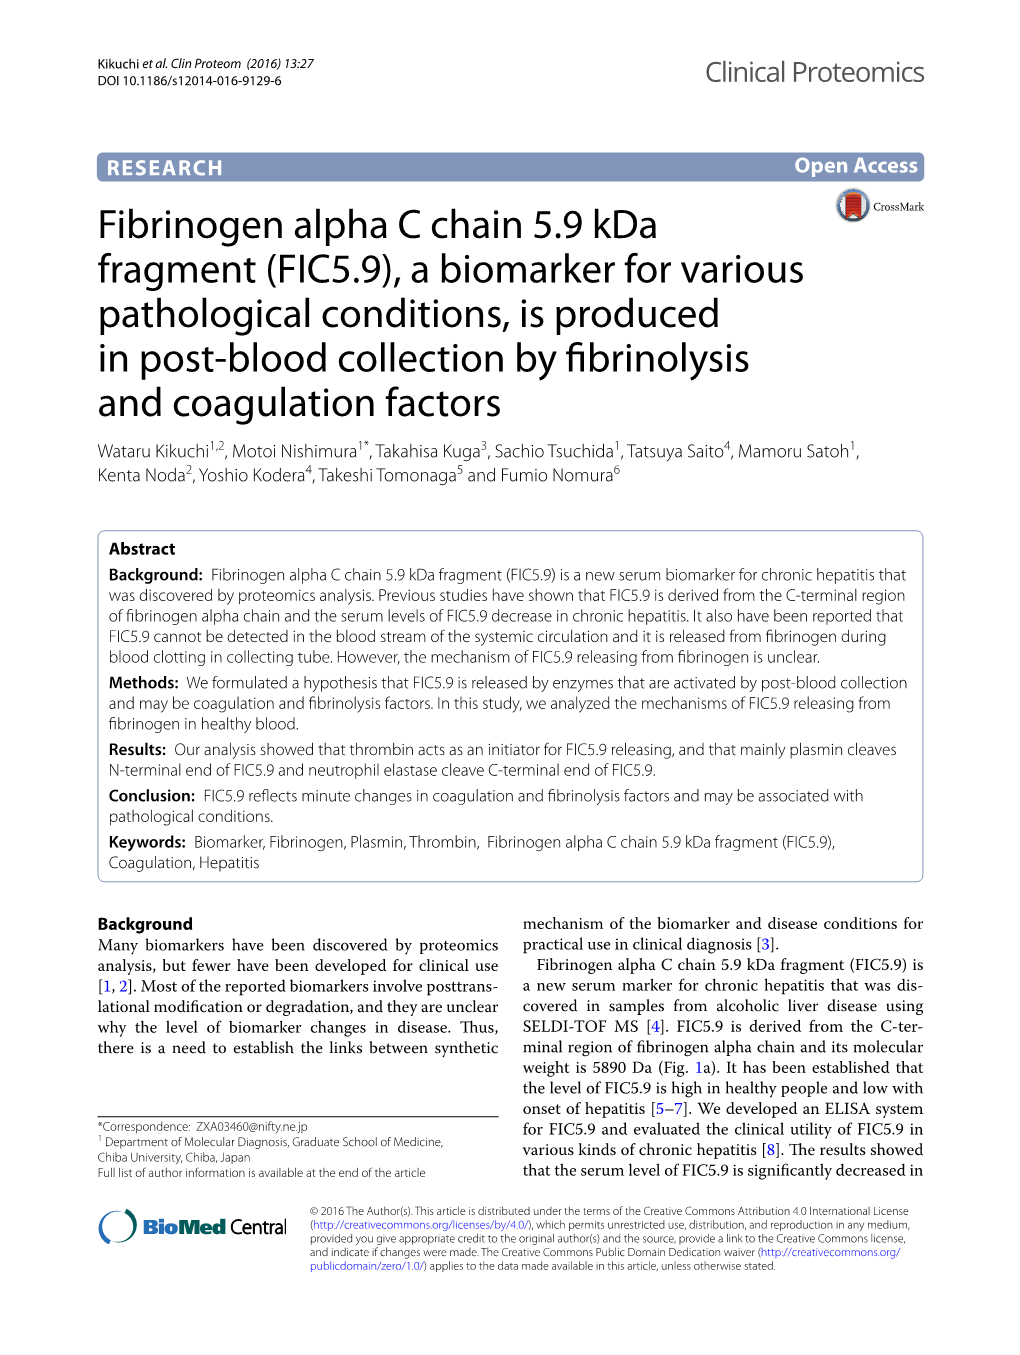 Fibrinogen Alpha C Chain 5.9 Kda Fragment (FIC5.9)